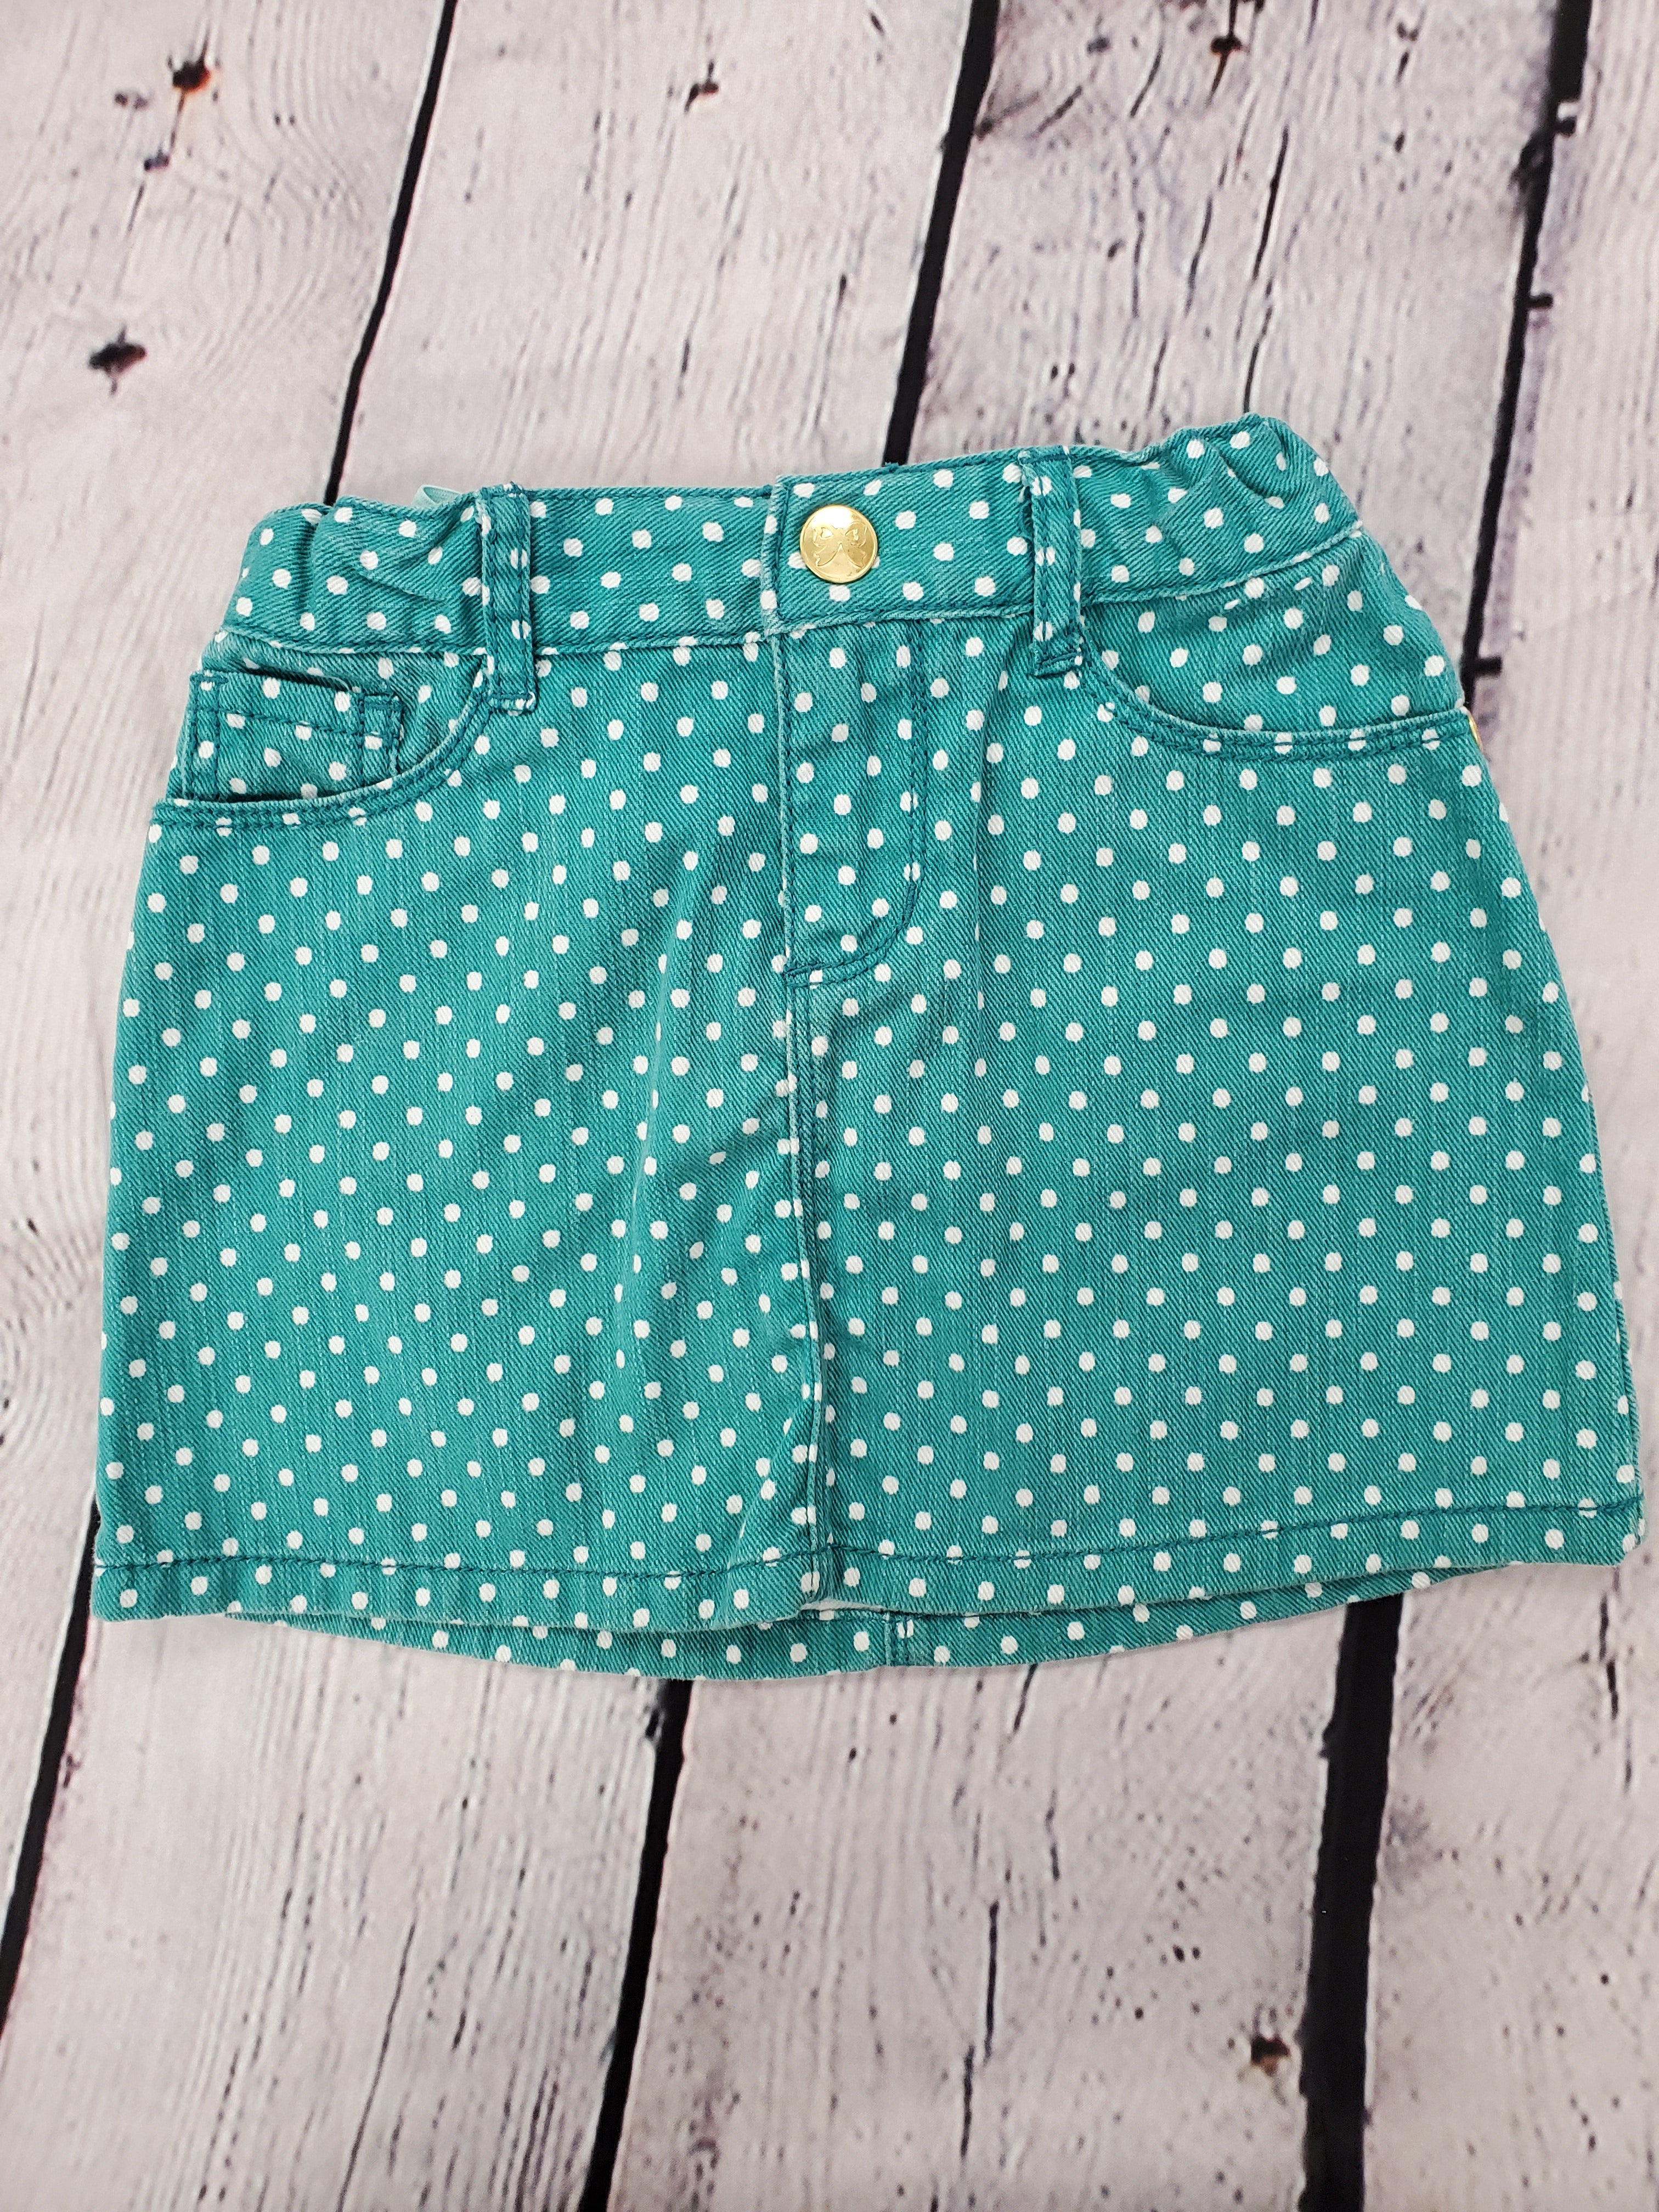 Gymboree green & white polka dots,demin skirt sz 4